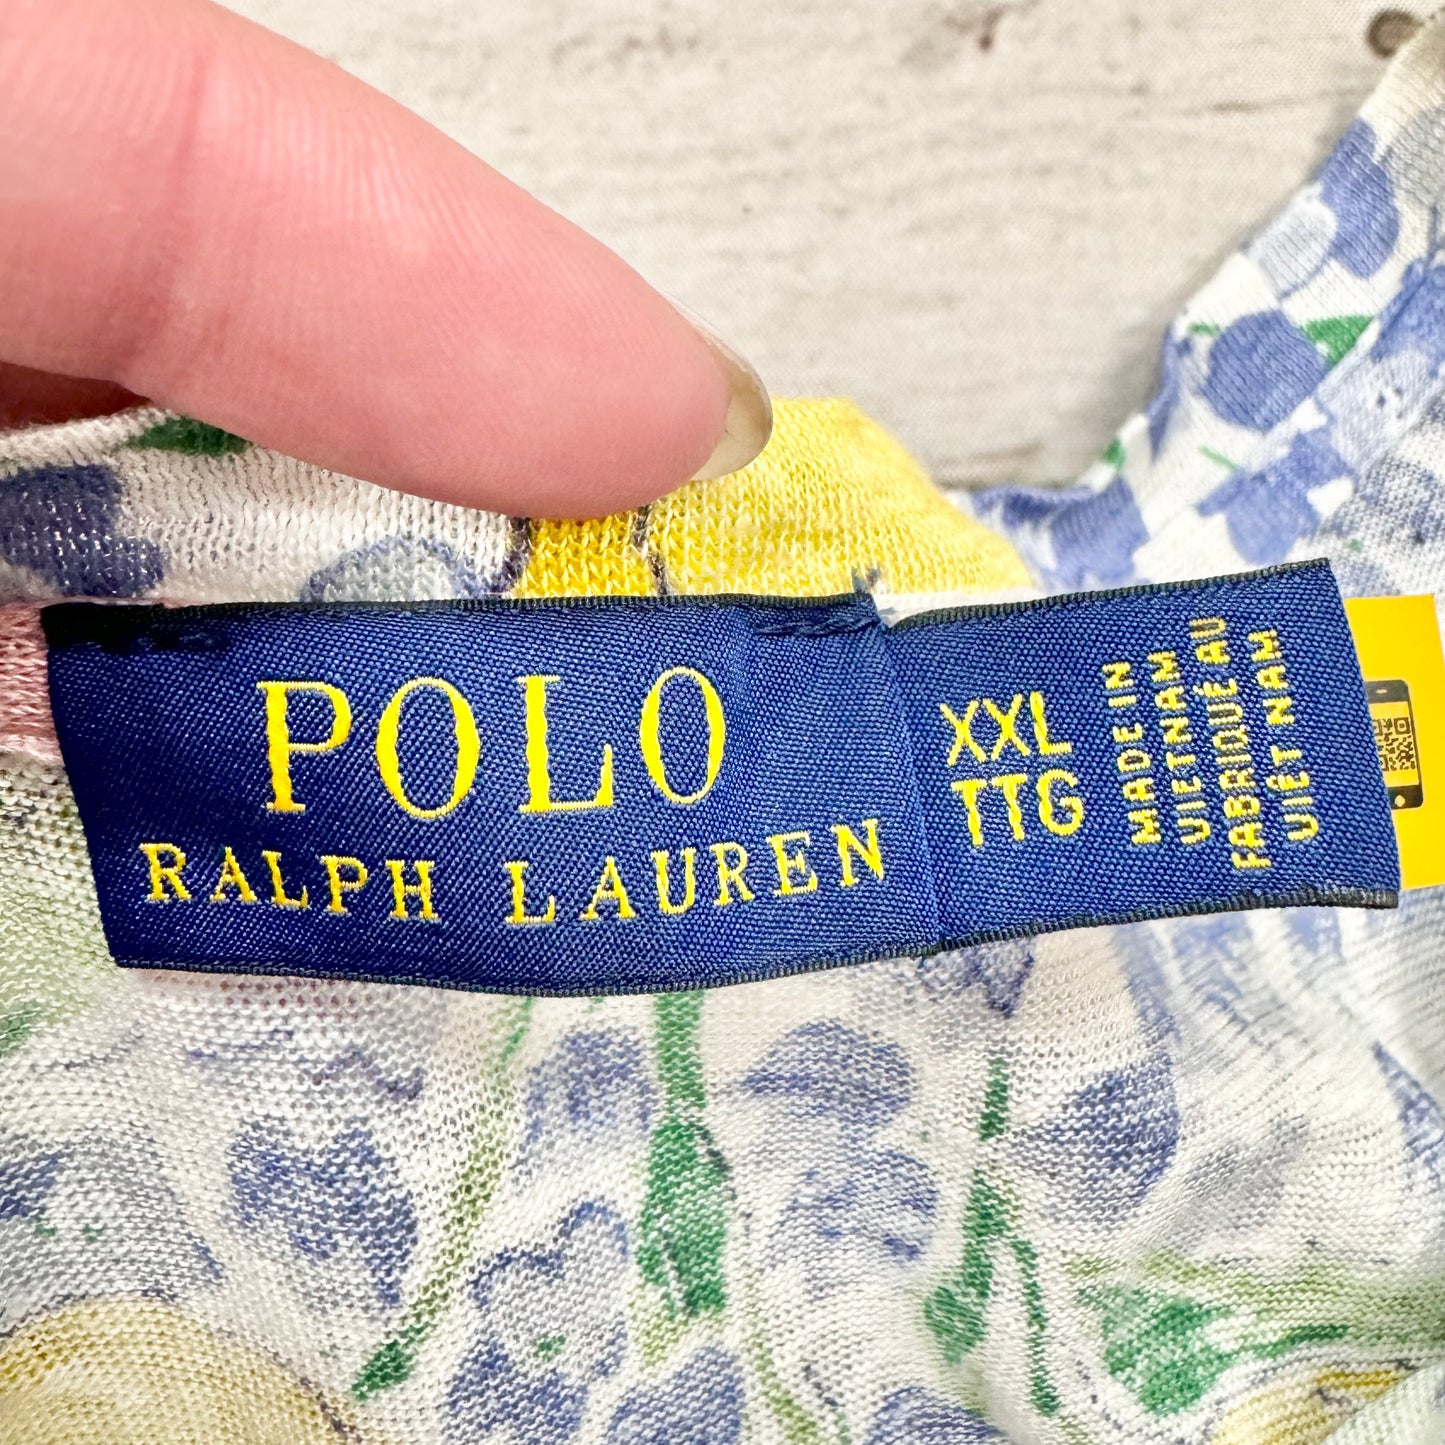 Top Short Sleeve By Polo Ralph Lauren  Size: 1x